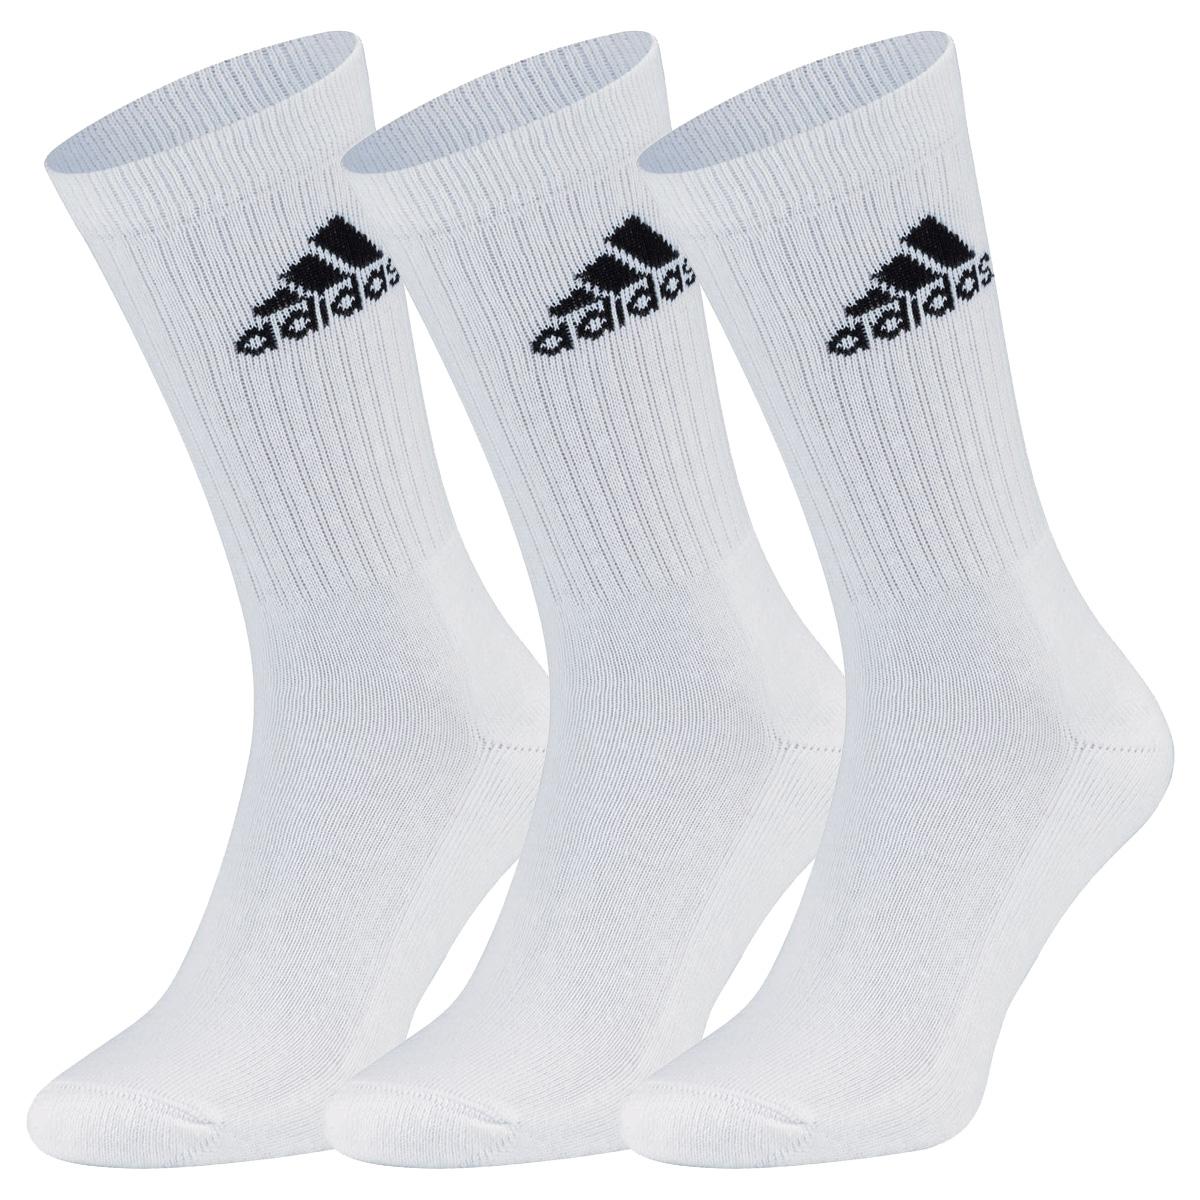 Adidas Adicrew Tennis Socks (3 Pairs) - White - Tennisnuts.com